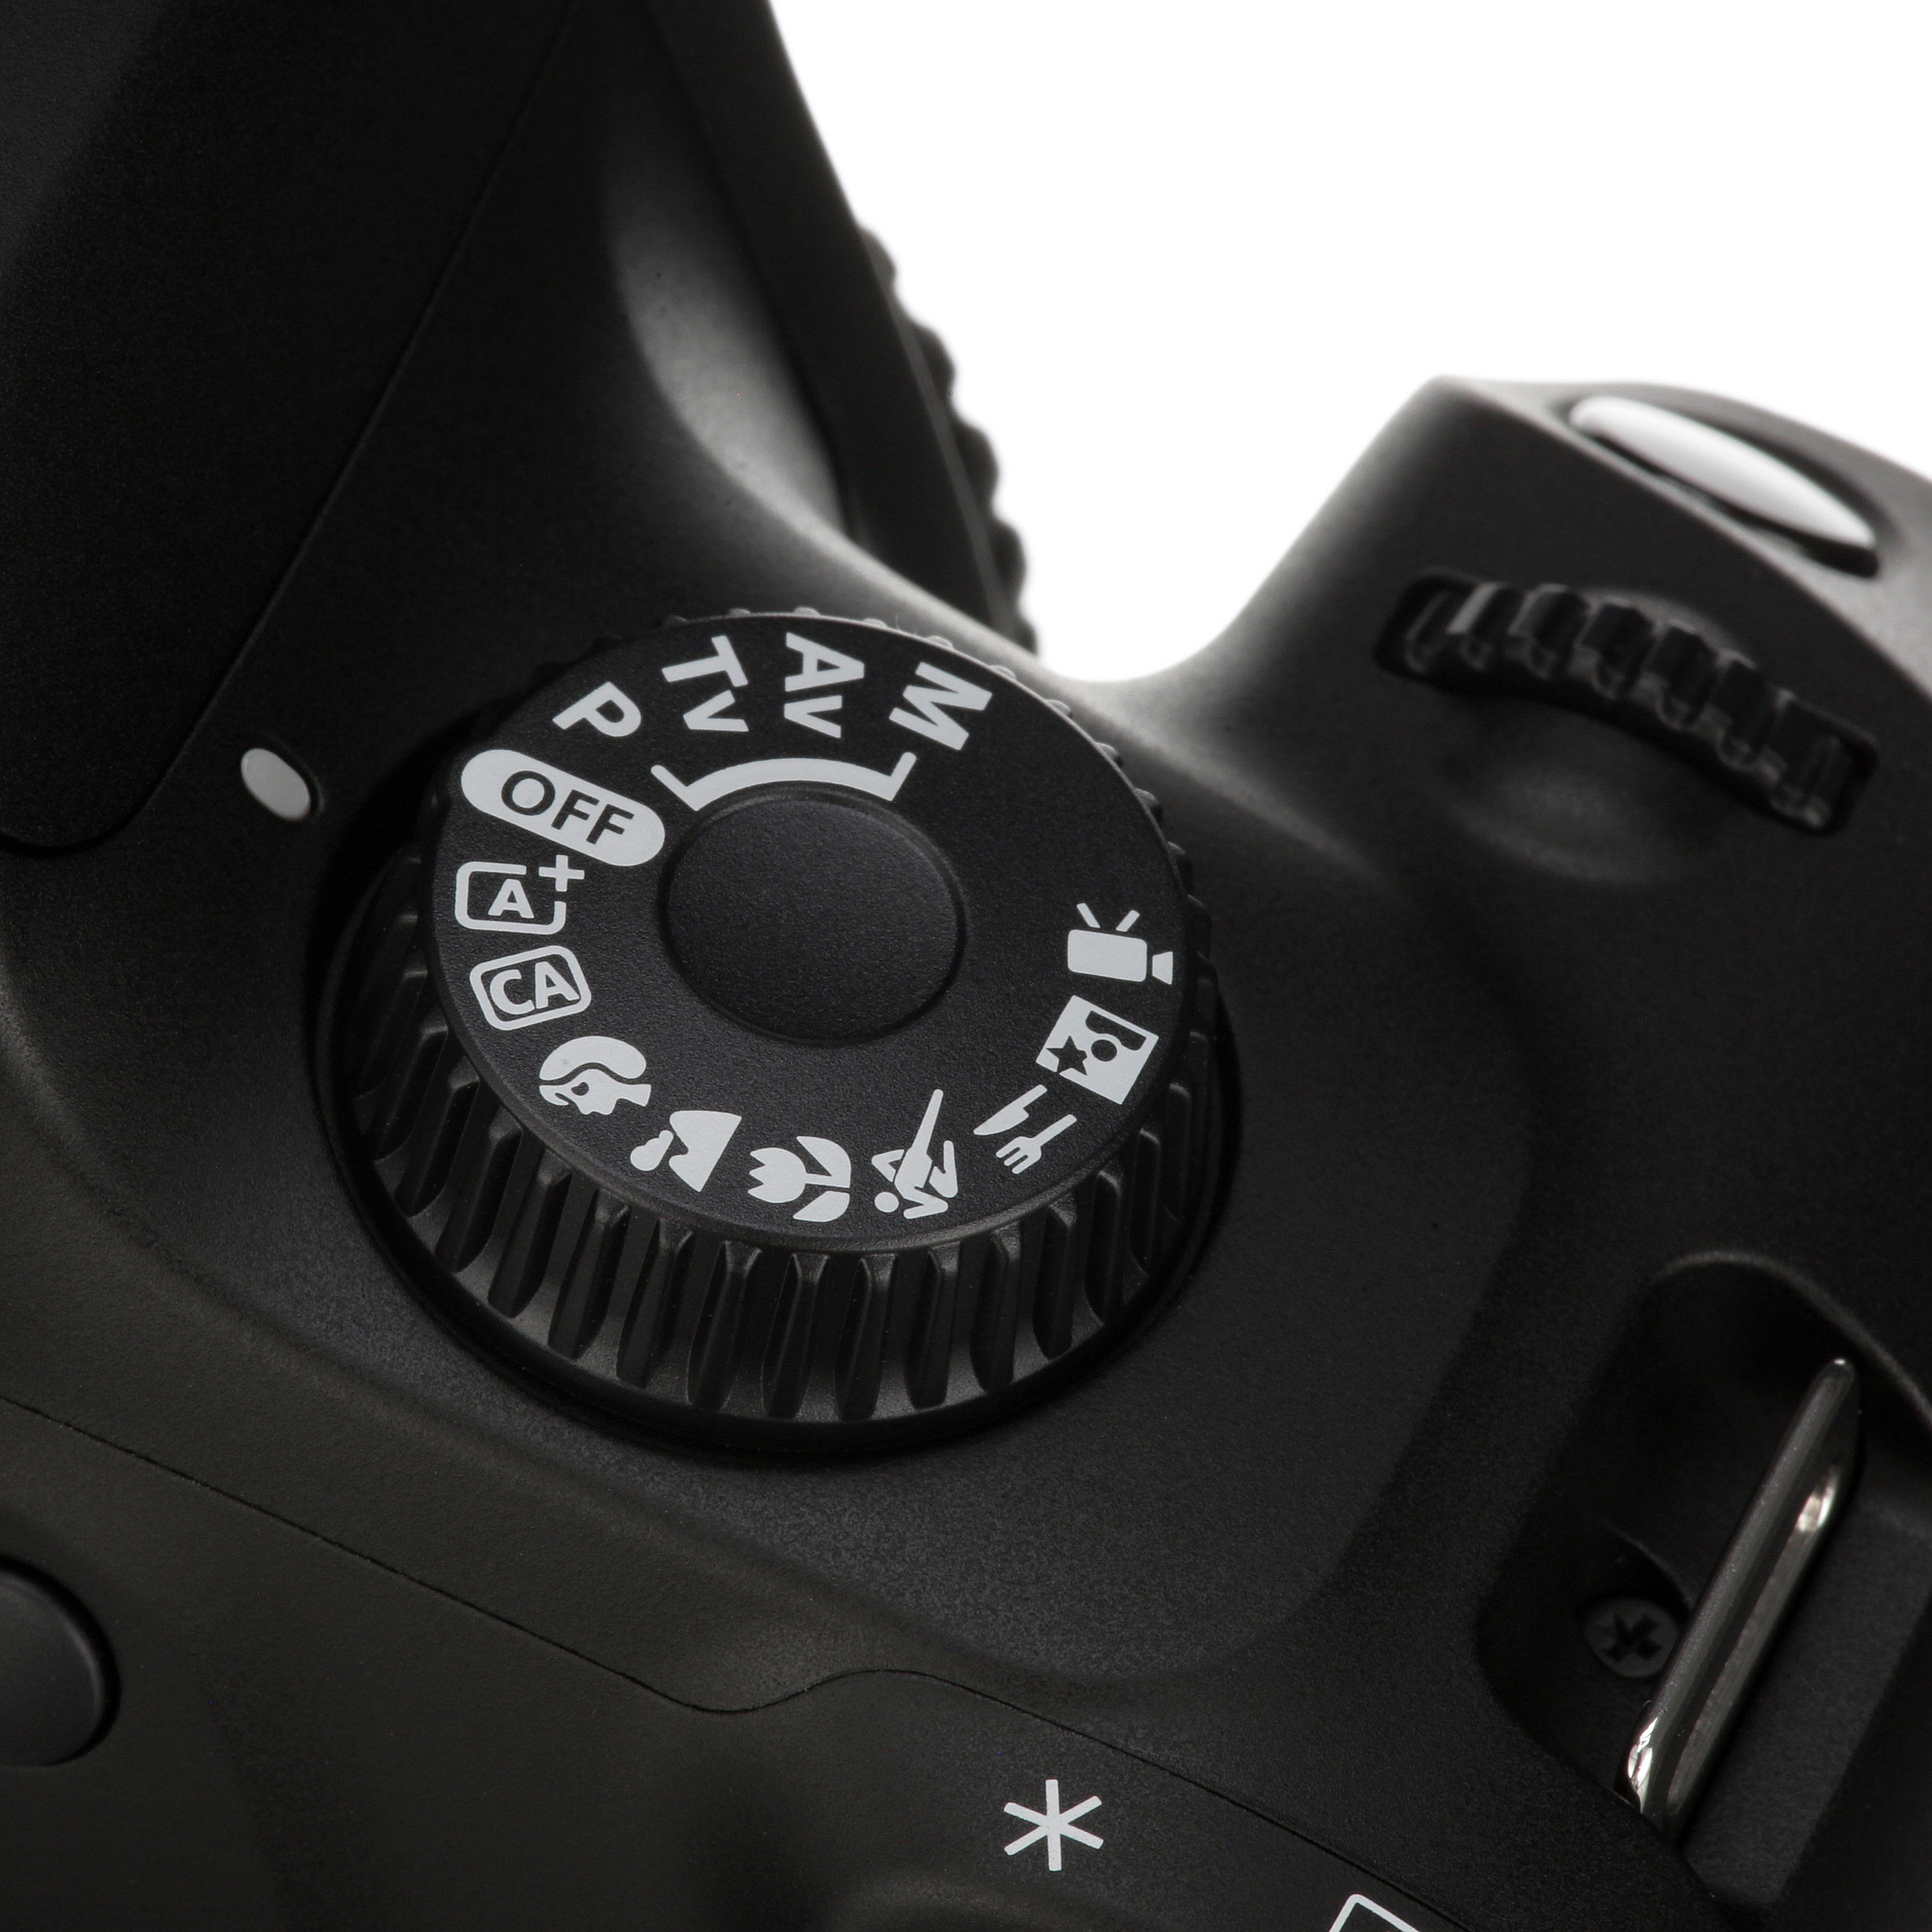 Canon EOS Rebel T100 Digital SLR Camera with 18-55mm Lens Kit, 18 Megapixel Sensor, Wi-Fi, DIGIC4+, SanDisk 32GB Memory Card and Live View Shooting - image 5 of 8